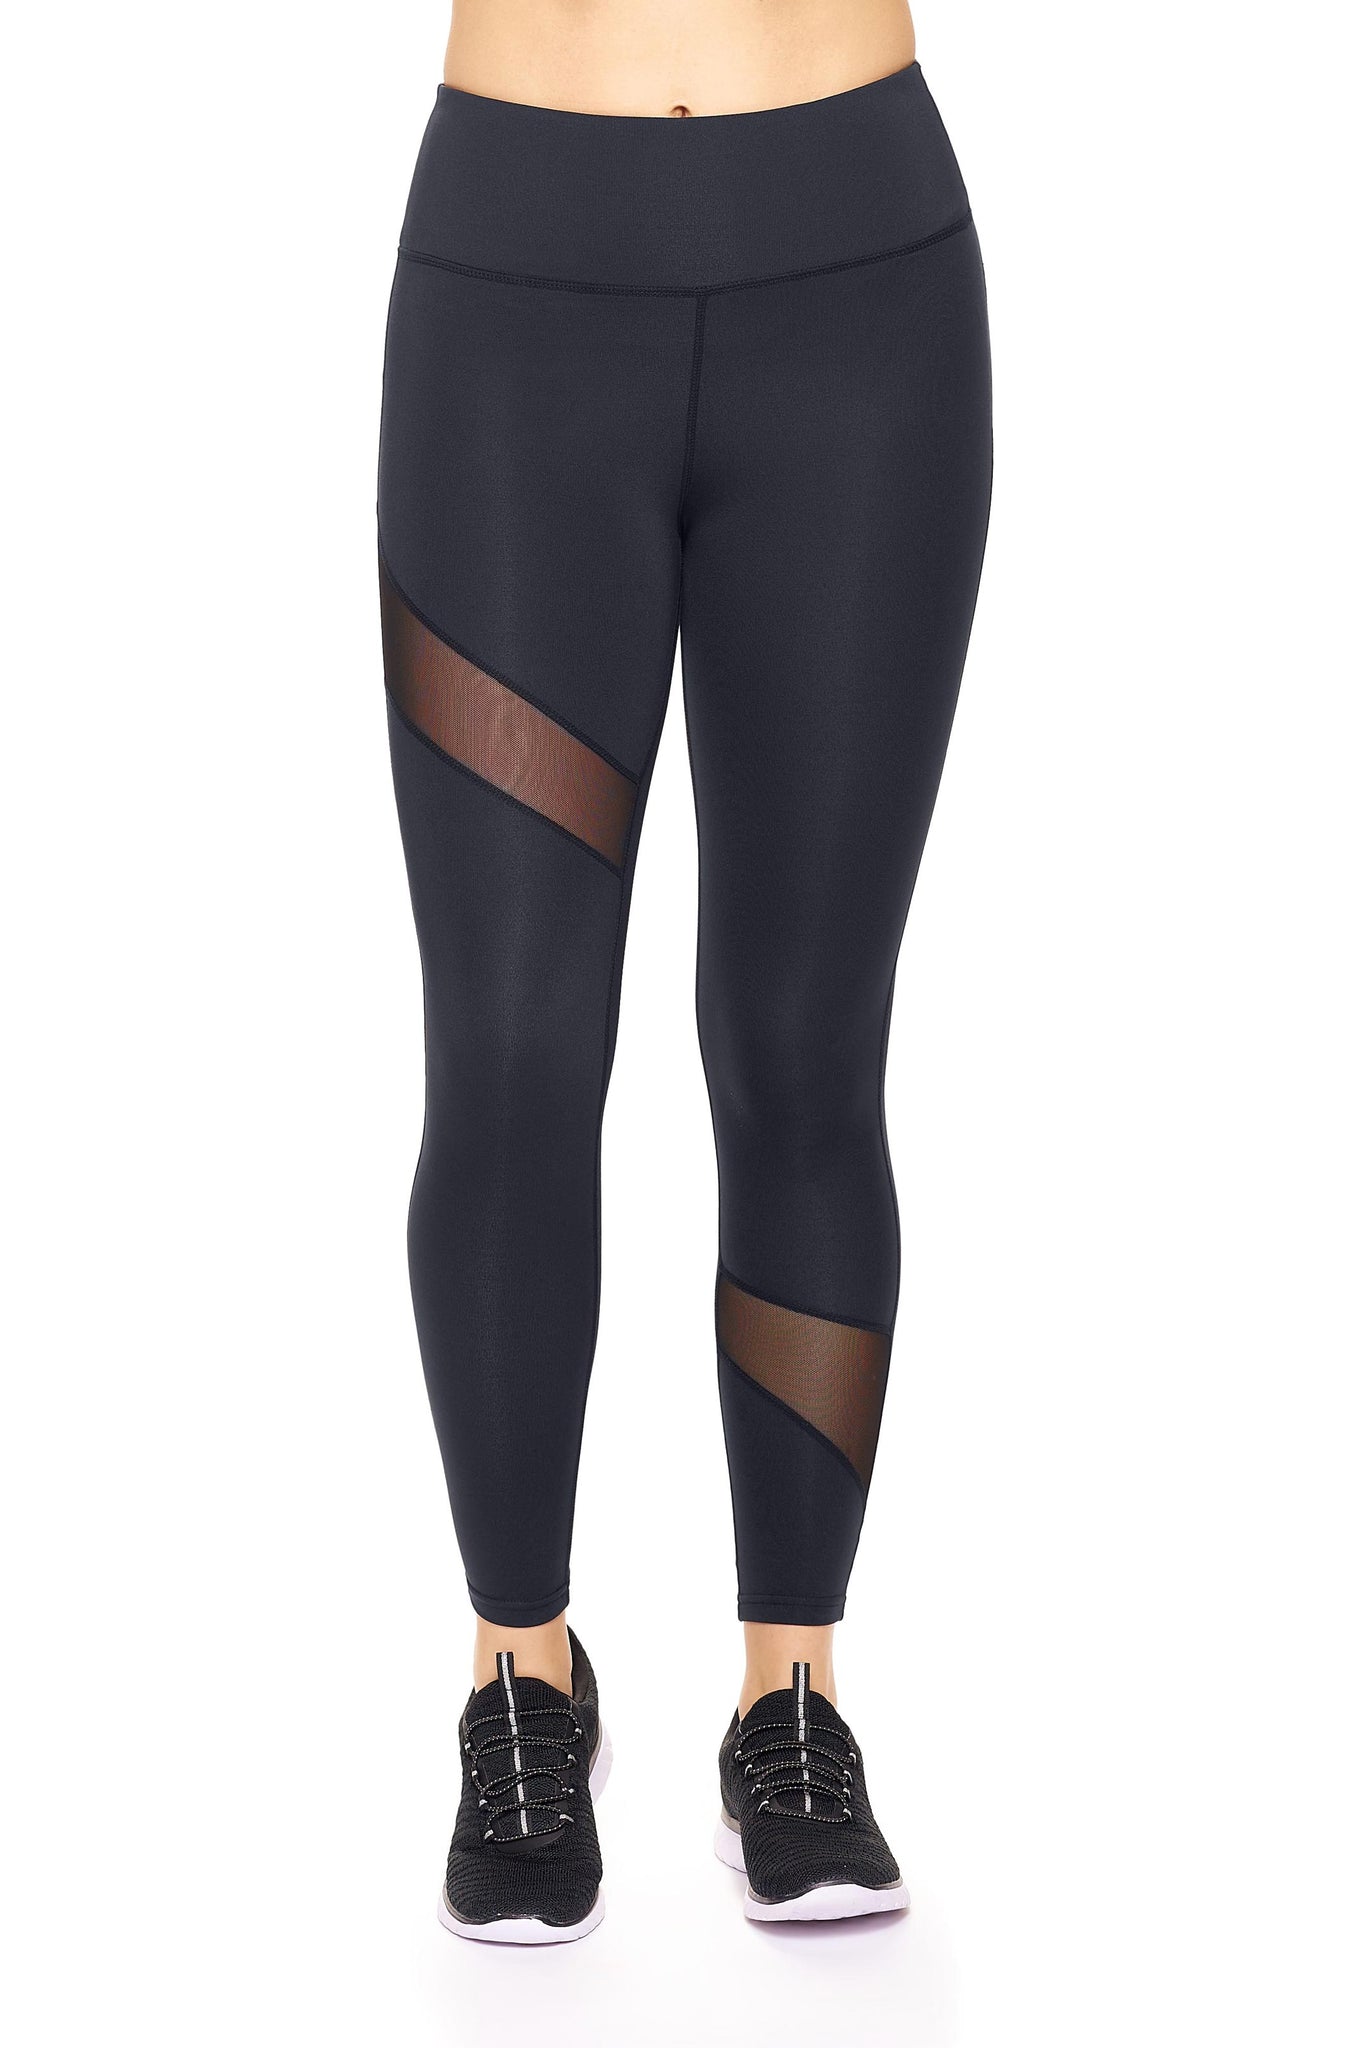 Expert Brand Wholesale Womens Leggings high waist Asymmetric mesh panel black